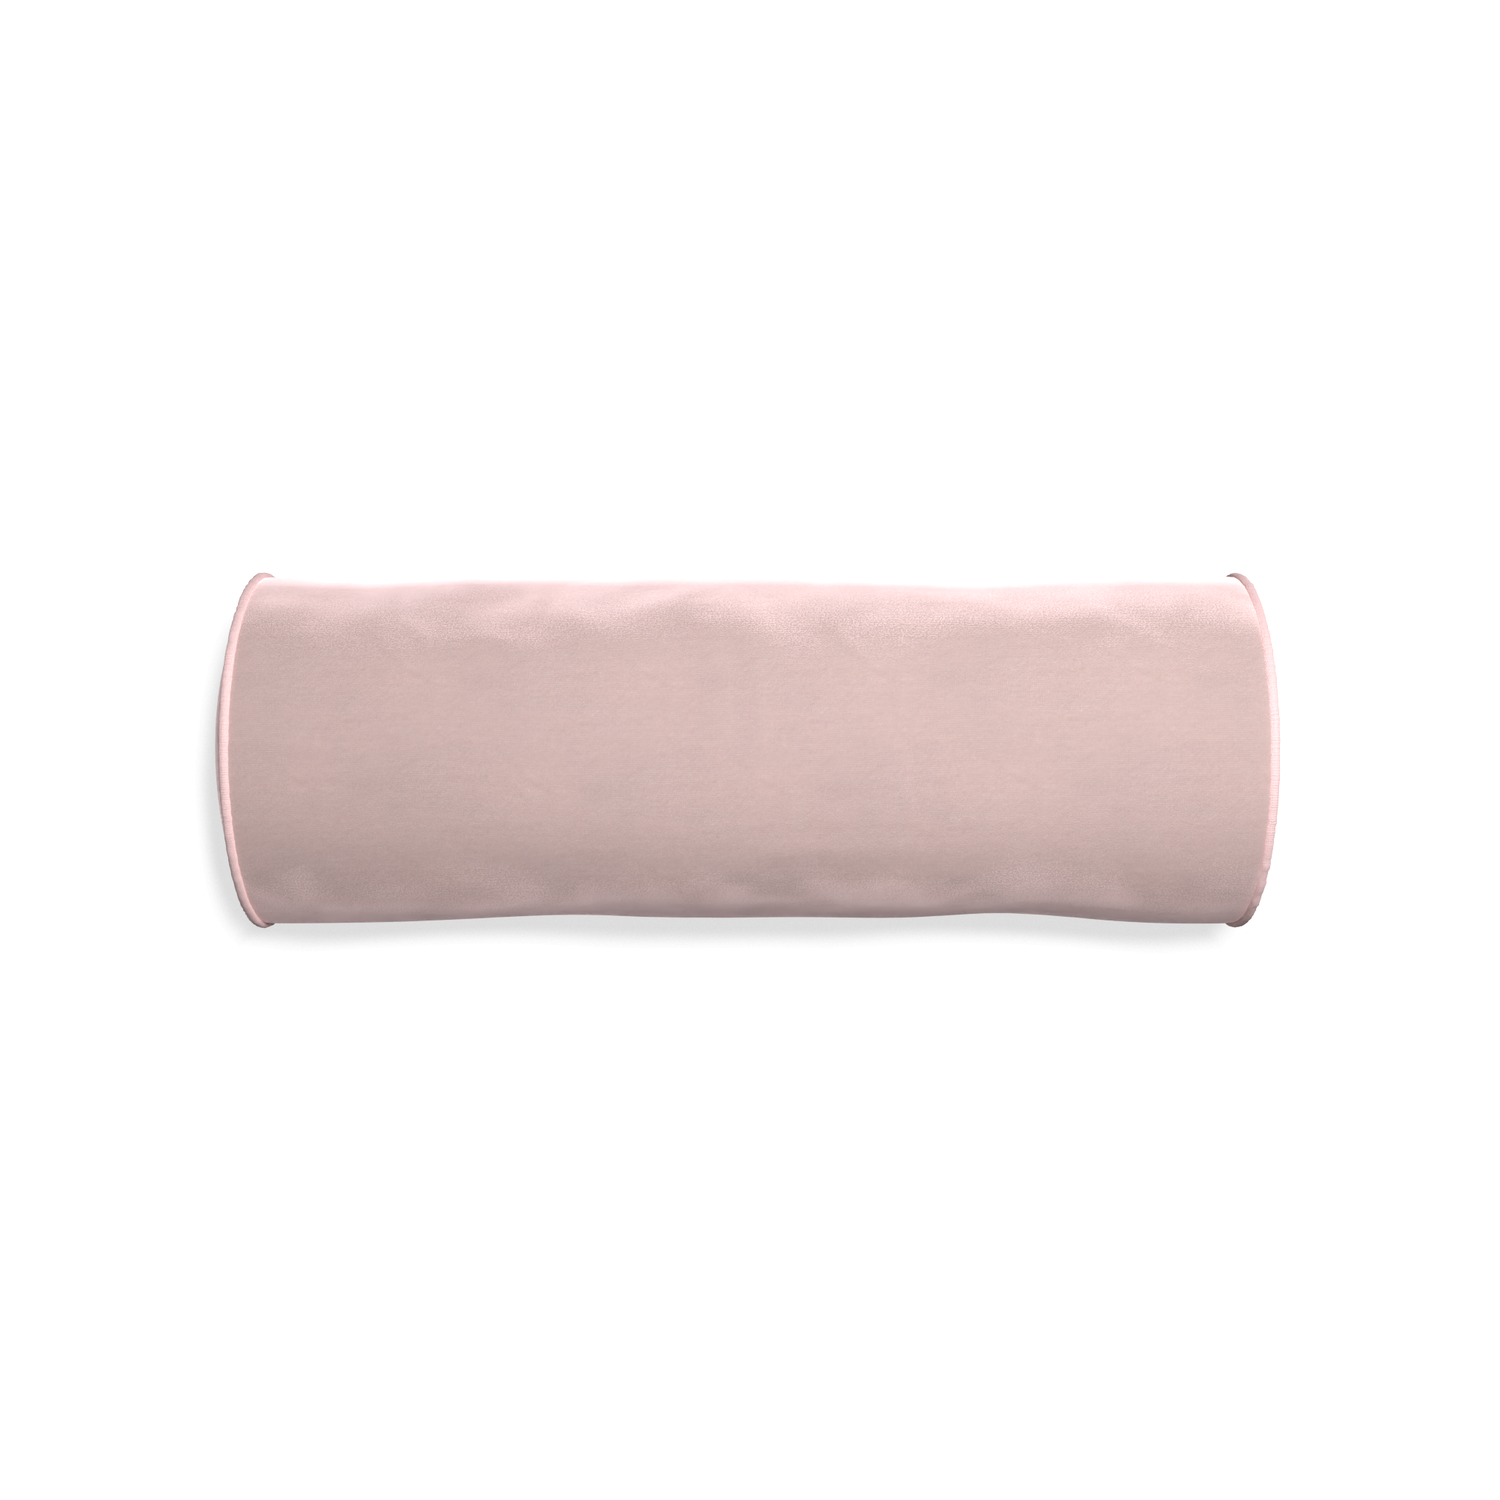 bolster light pink velvet pillow with light pink piping